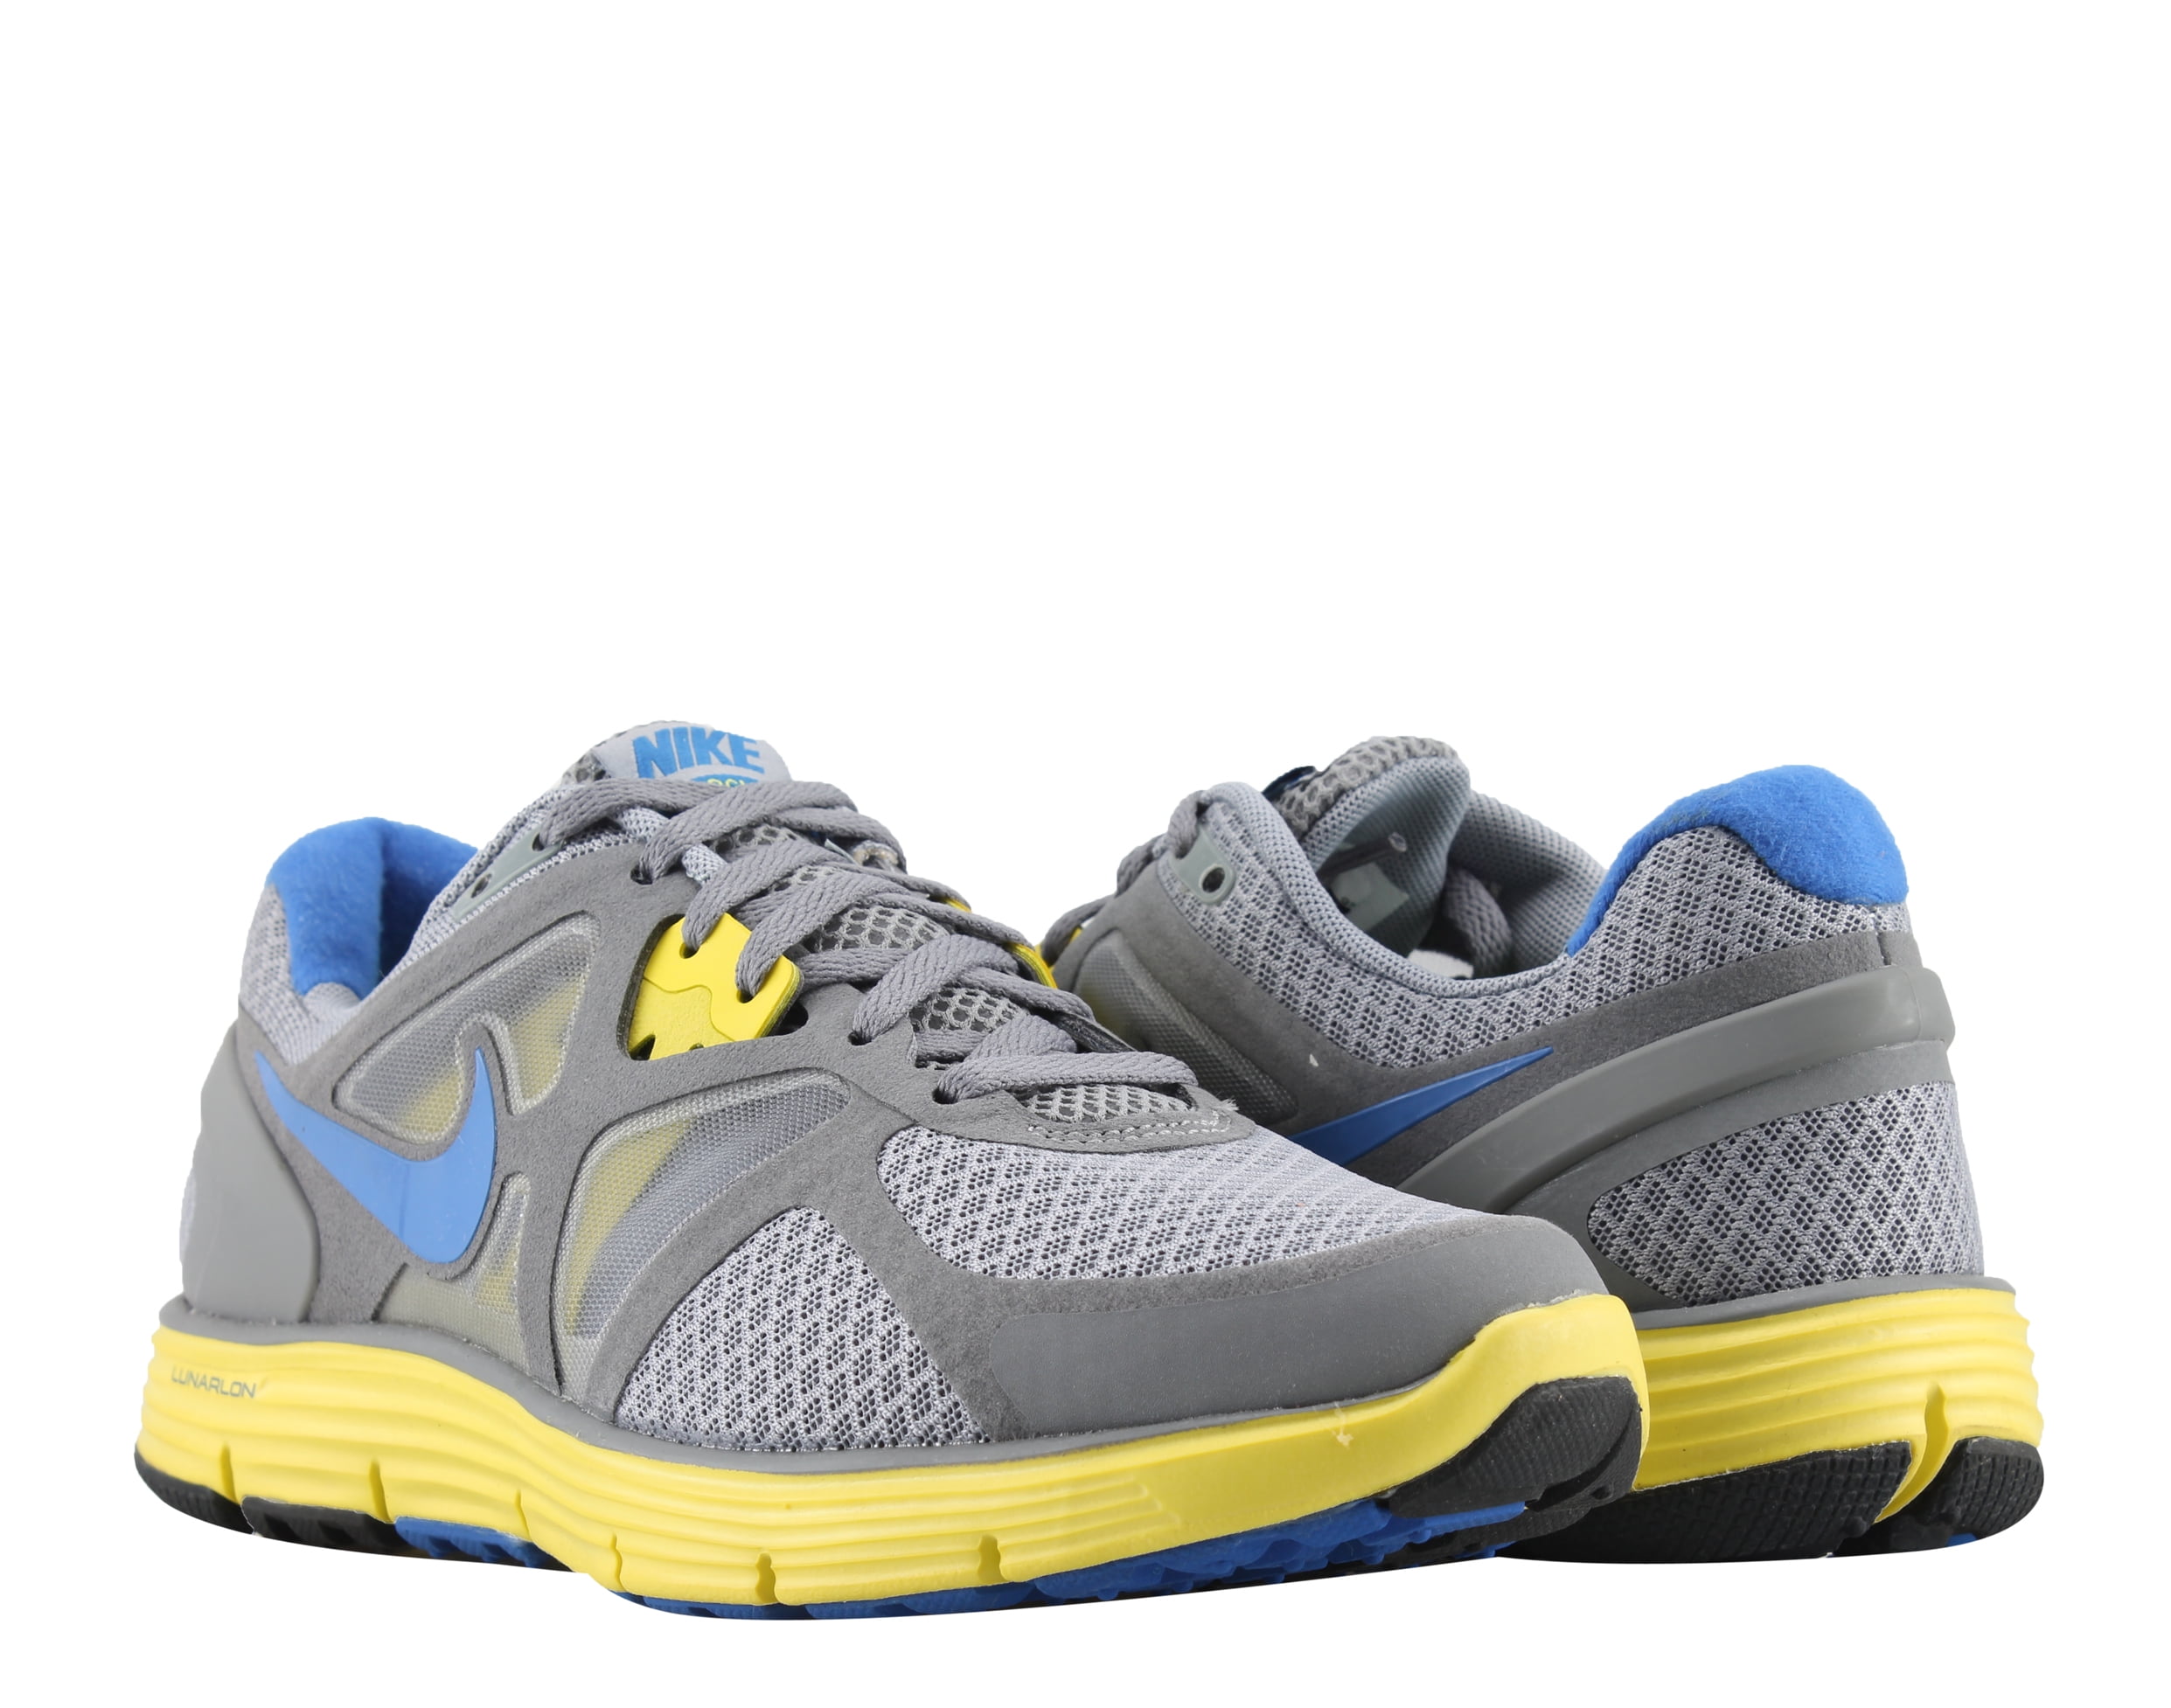 Nike Lunarglide+ Running Shoes Size 9.5 - Walmart.com